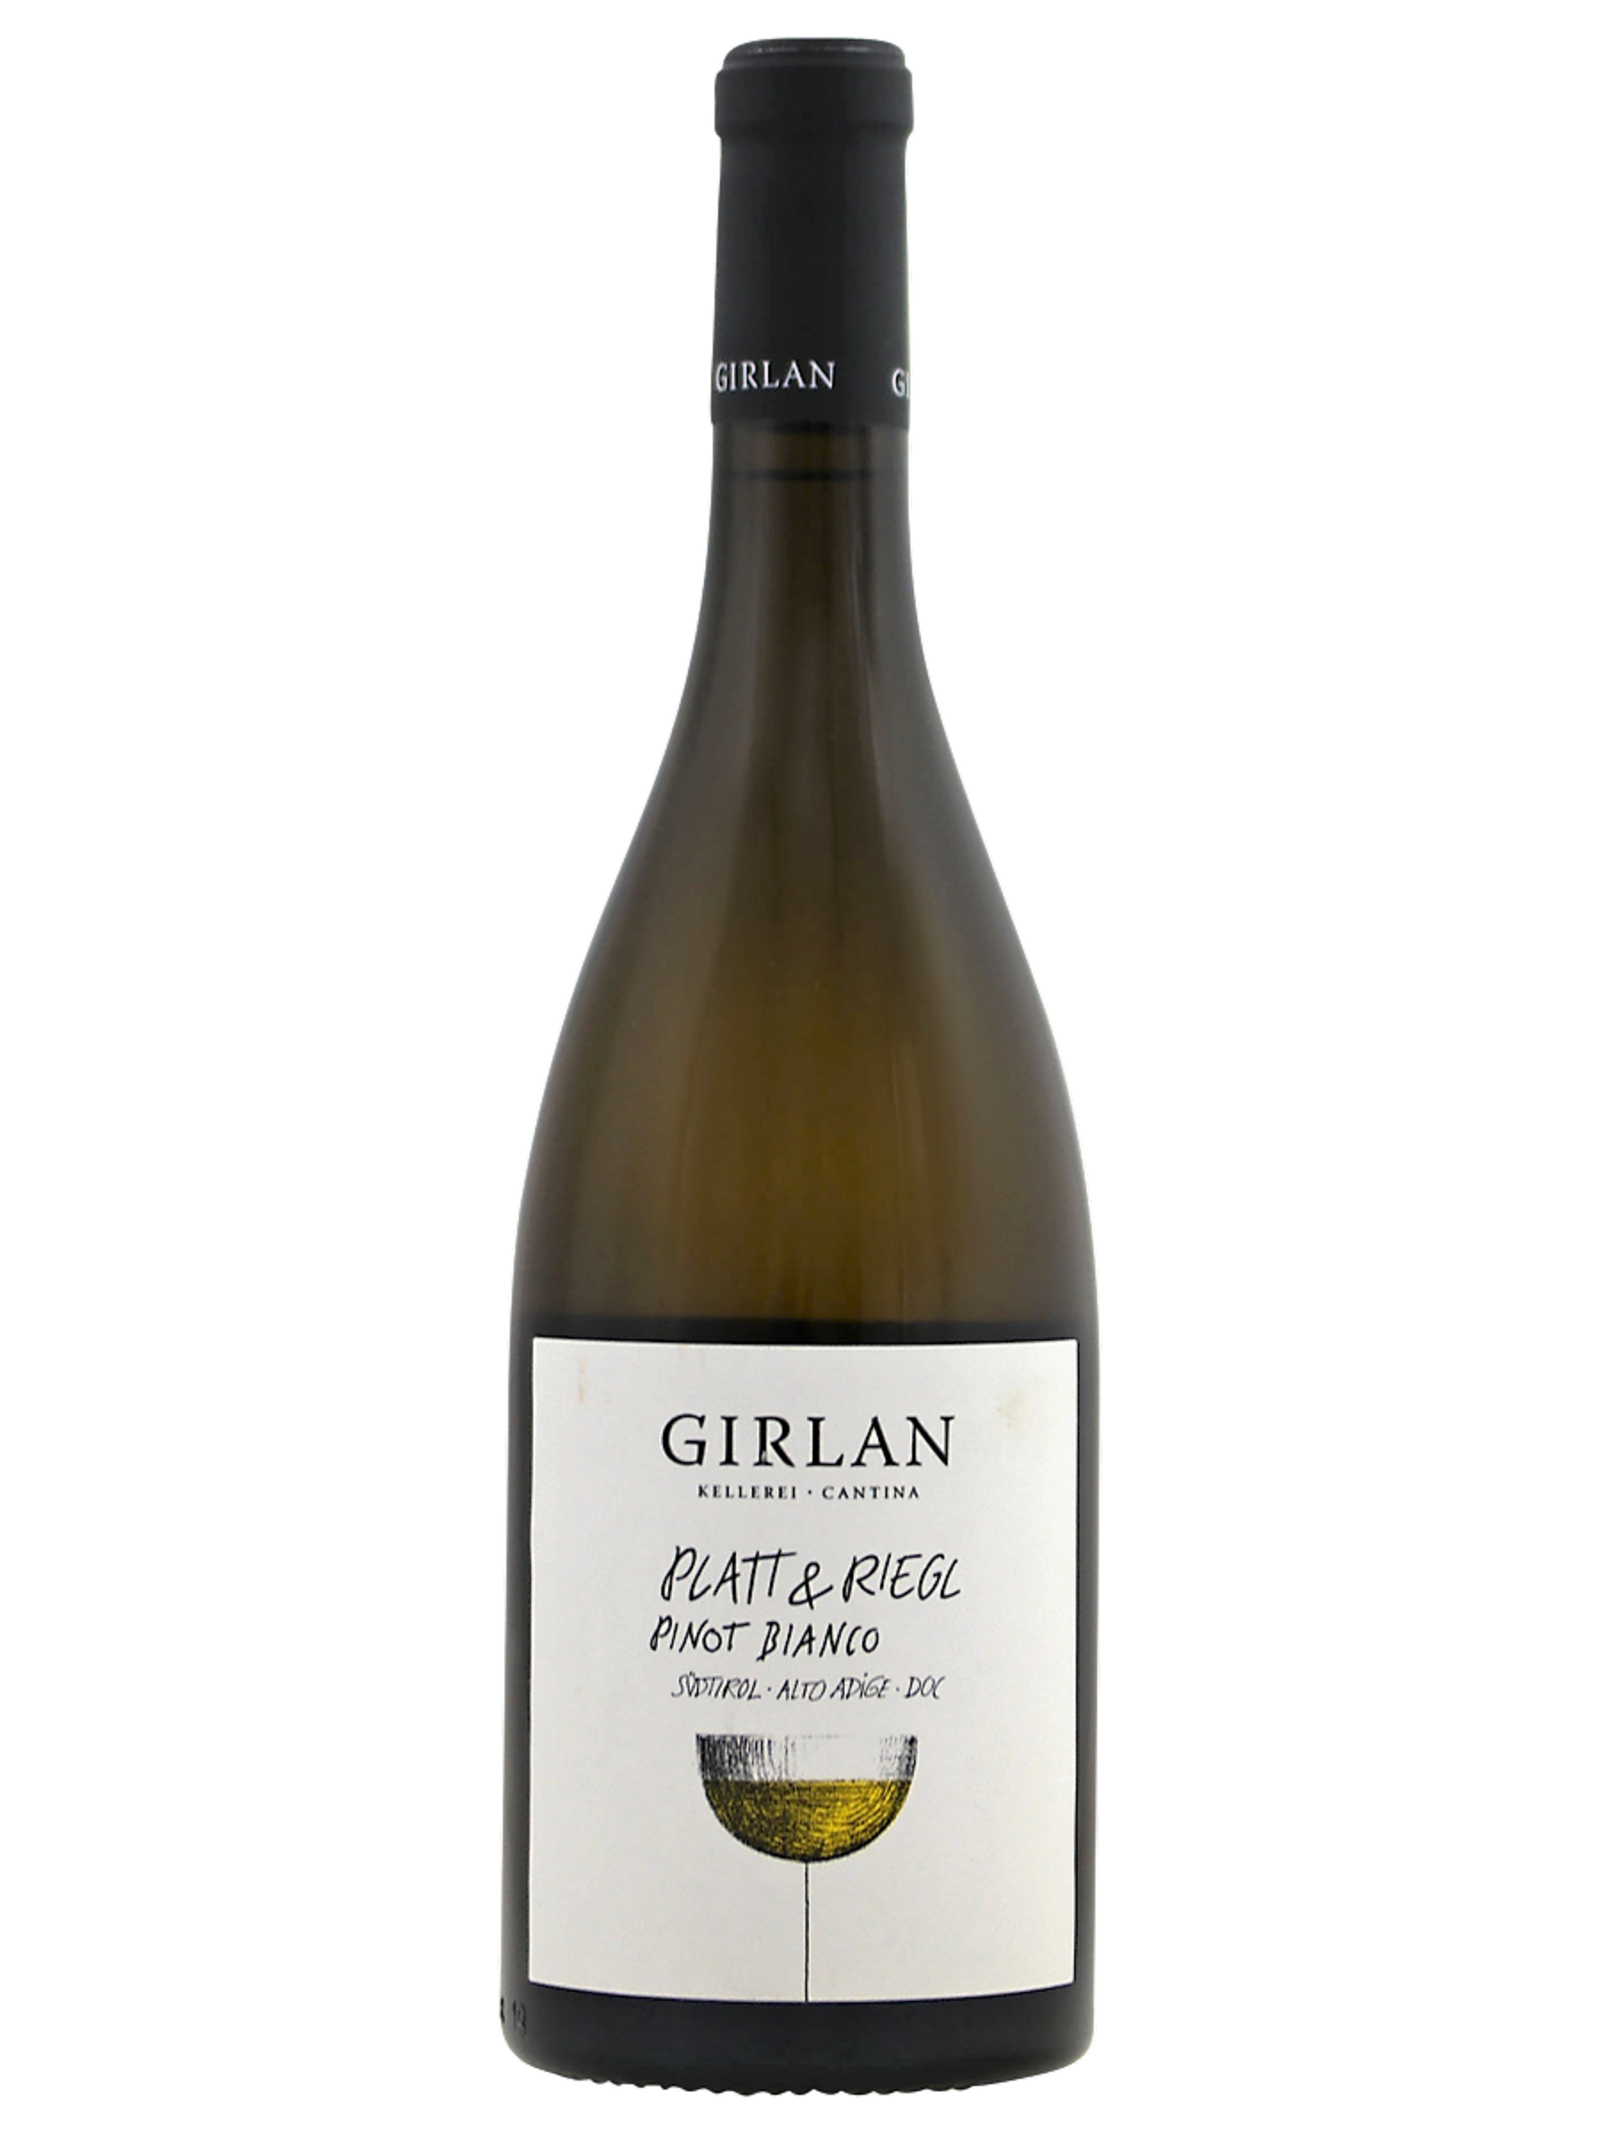 Girlan Girlan Platt & Riegl Pinot Bianco